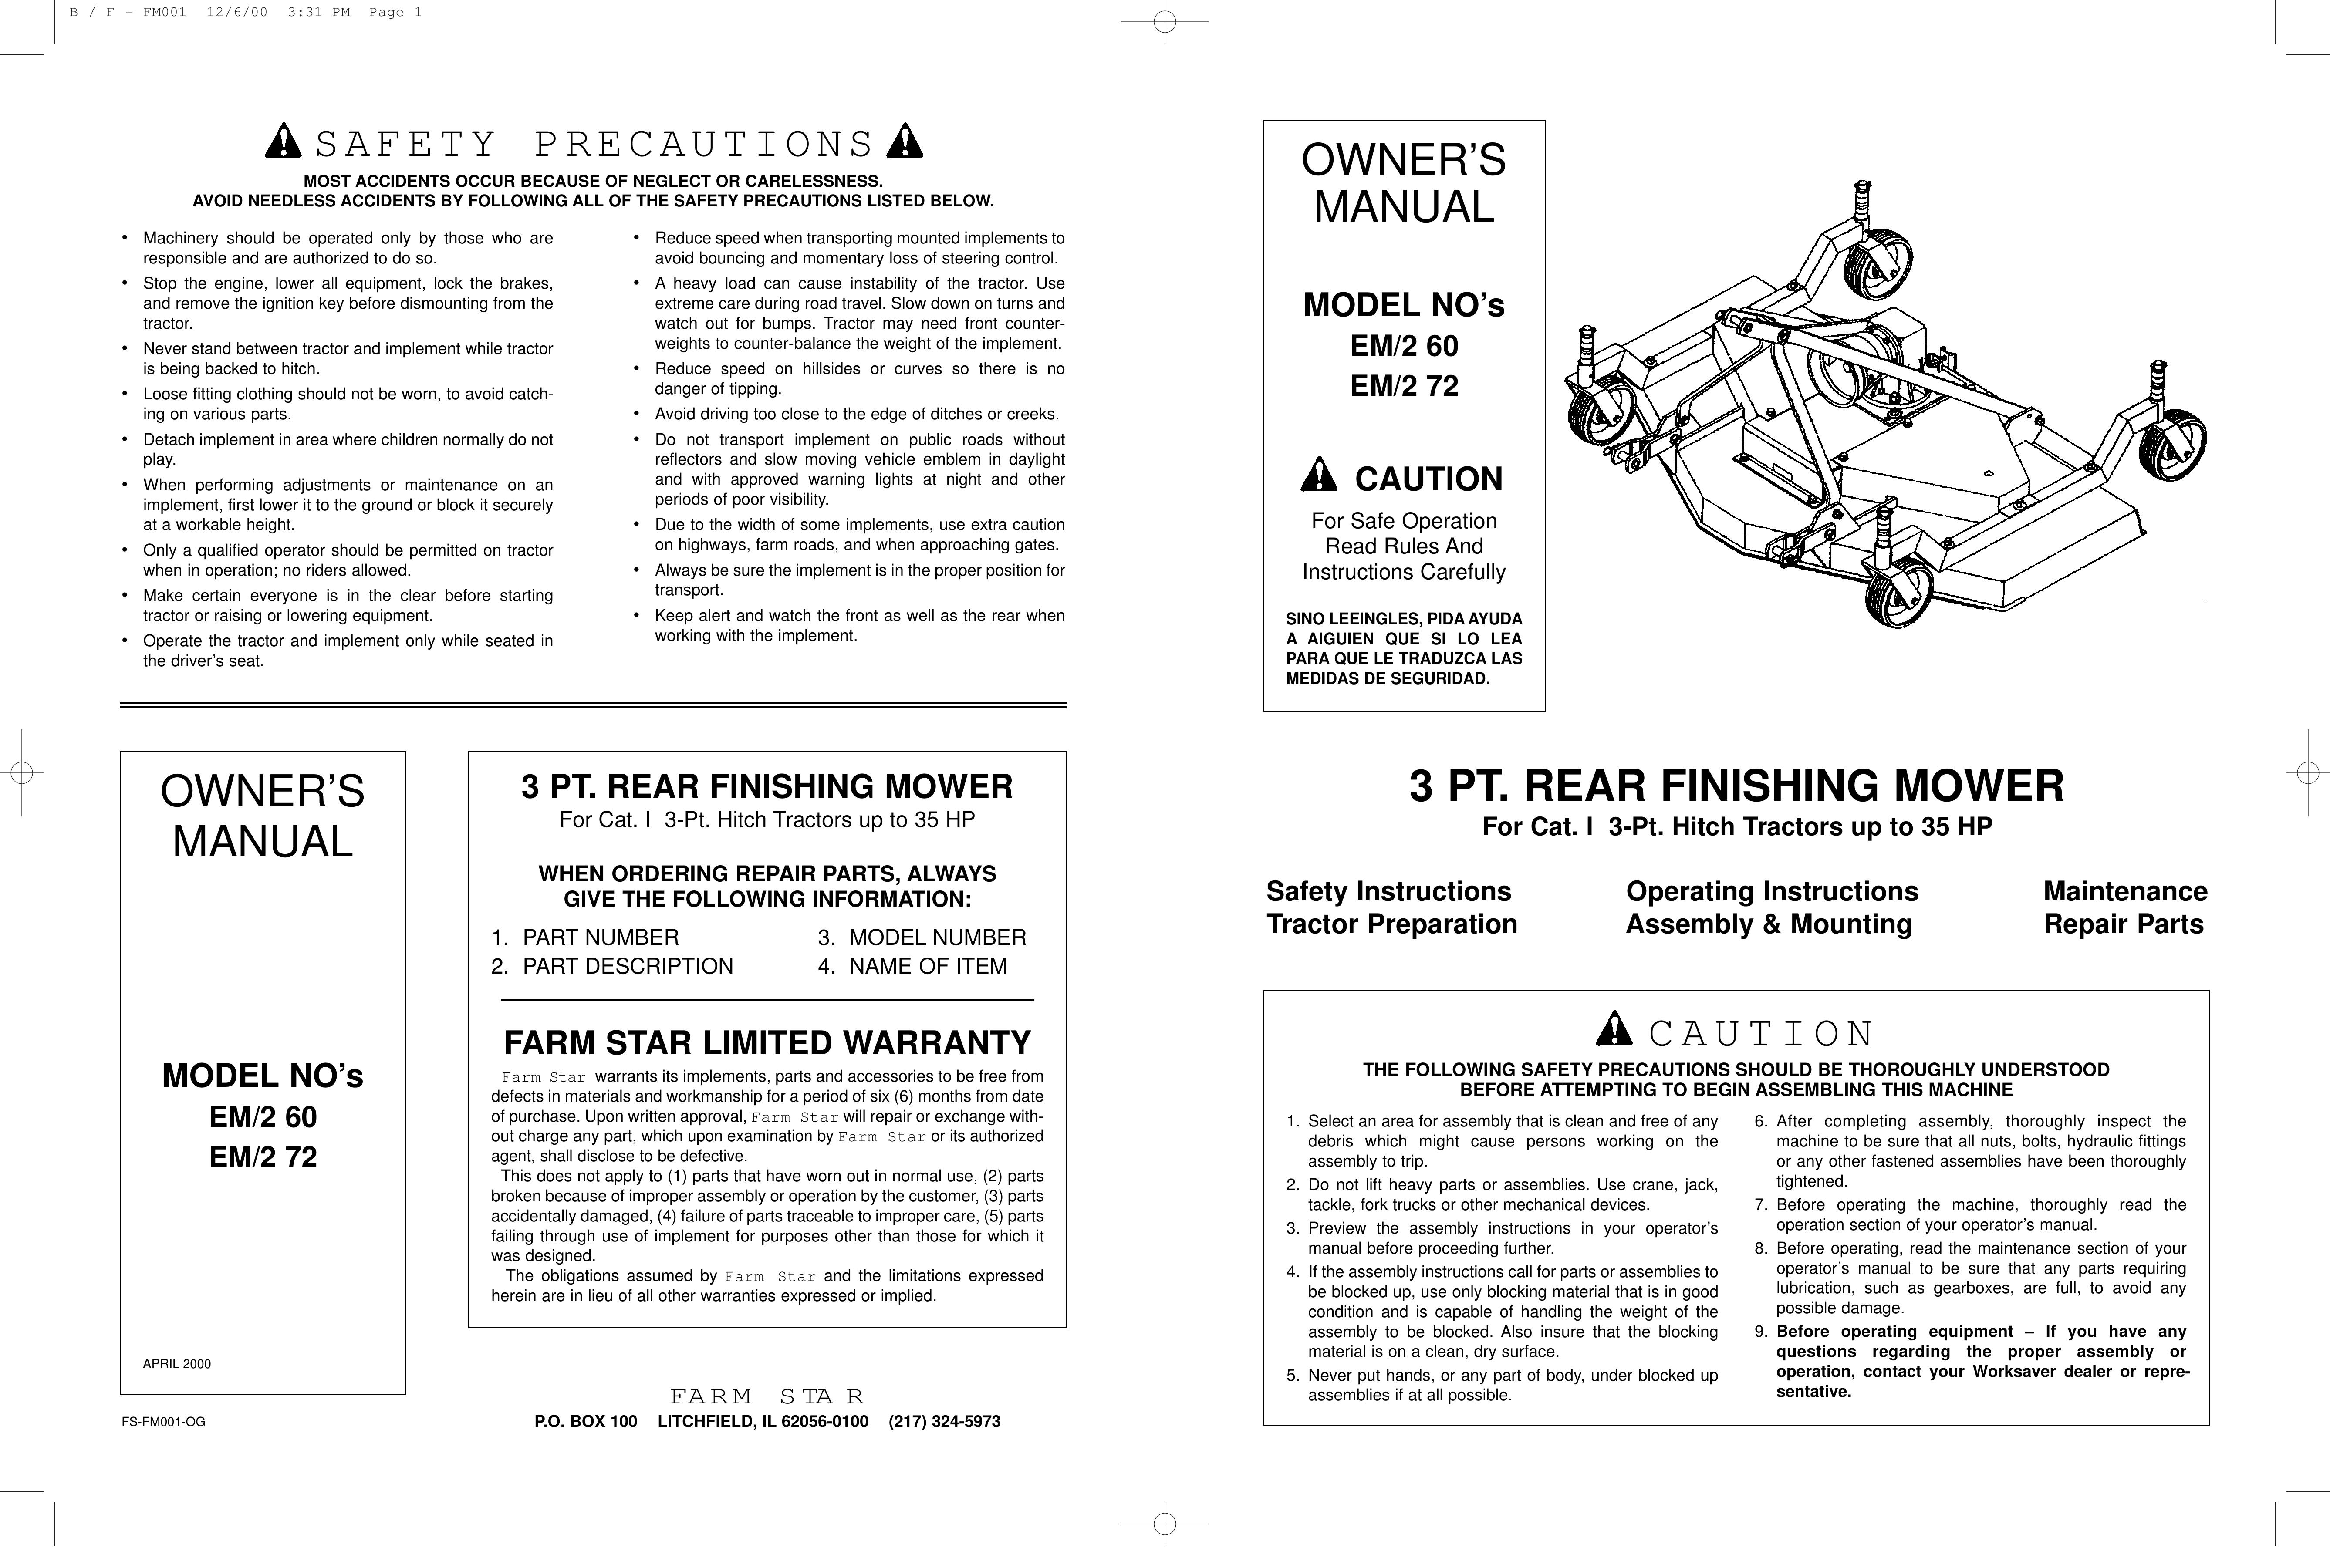 Worksaver EM/2 60, EM/2 72 Lawn Mower User Manual